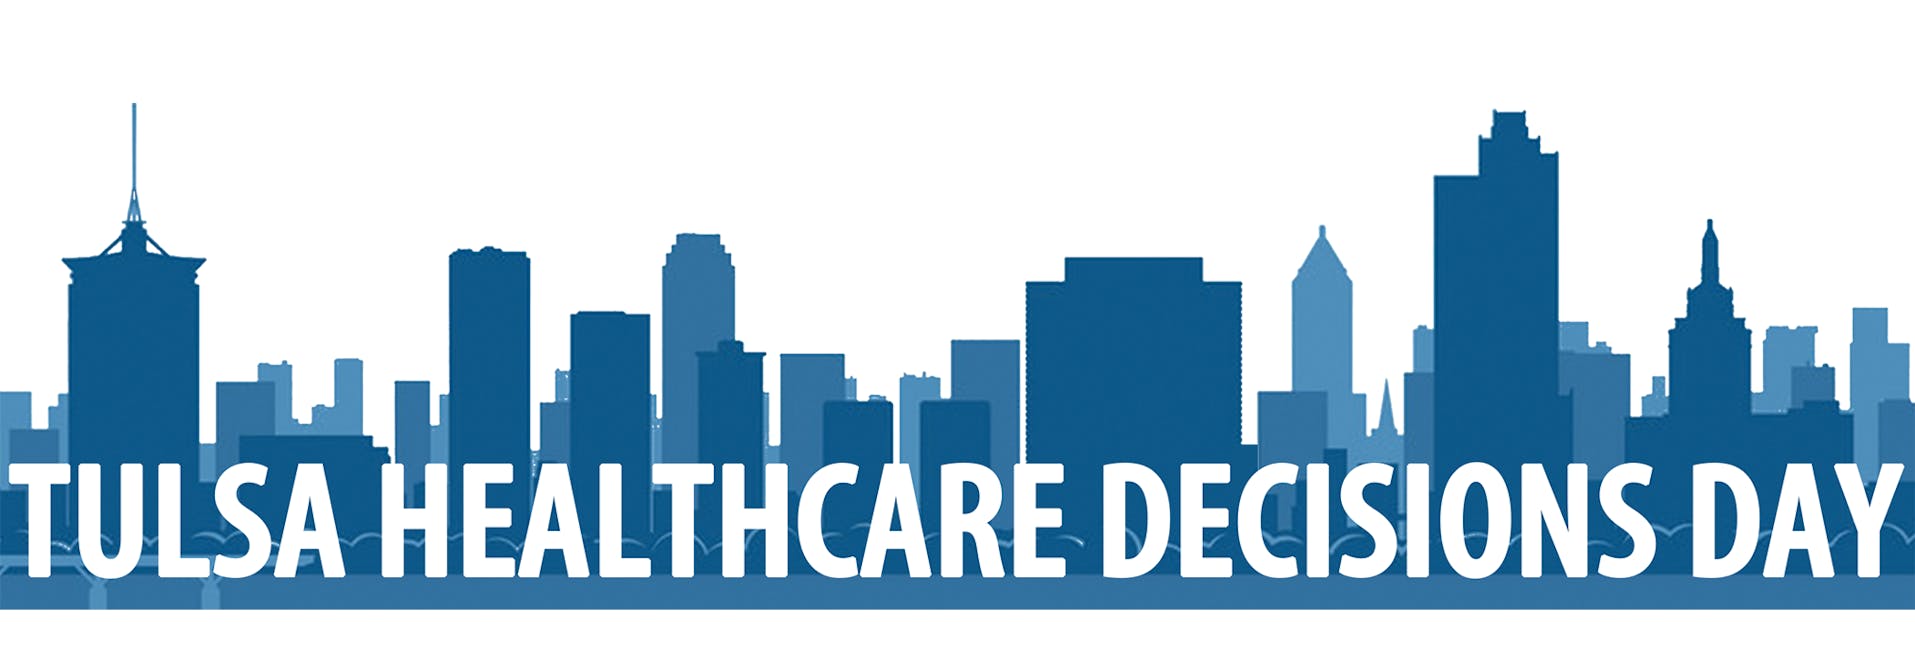 Tulsa Healthcare Decisions Day